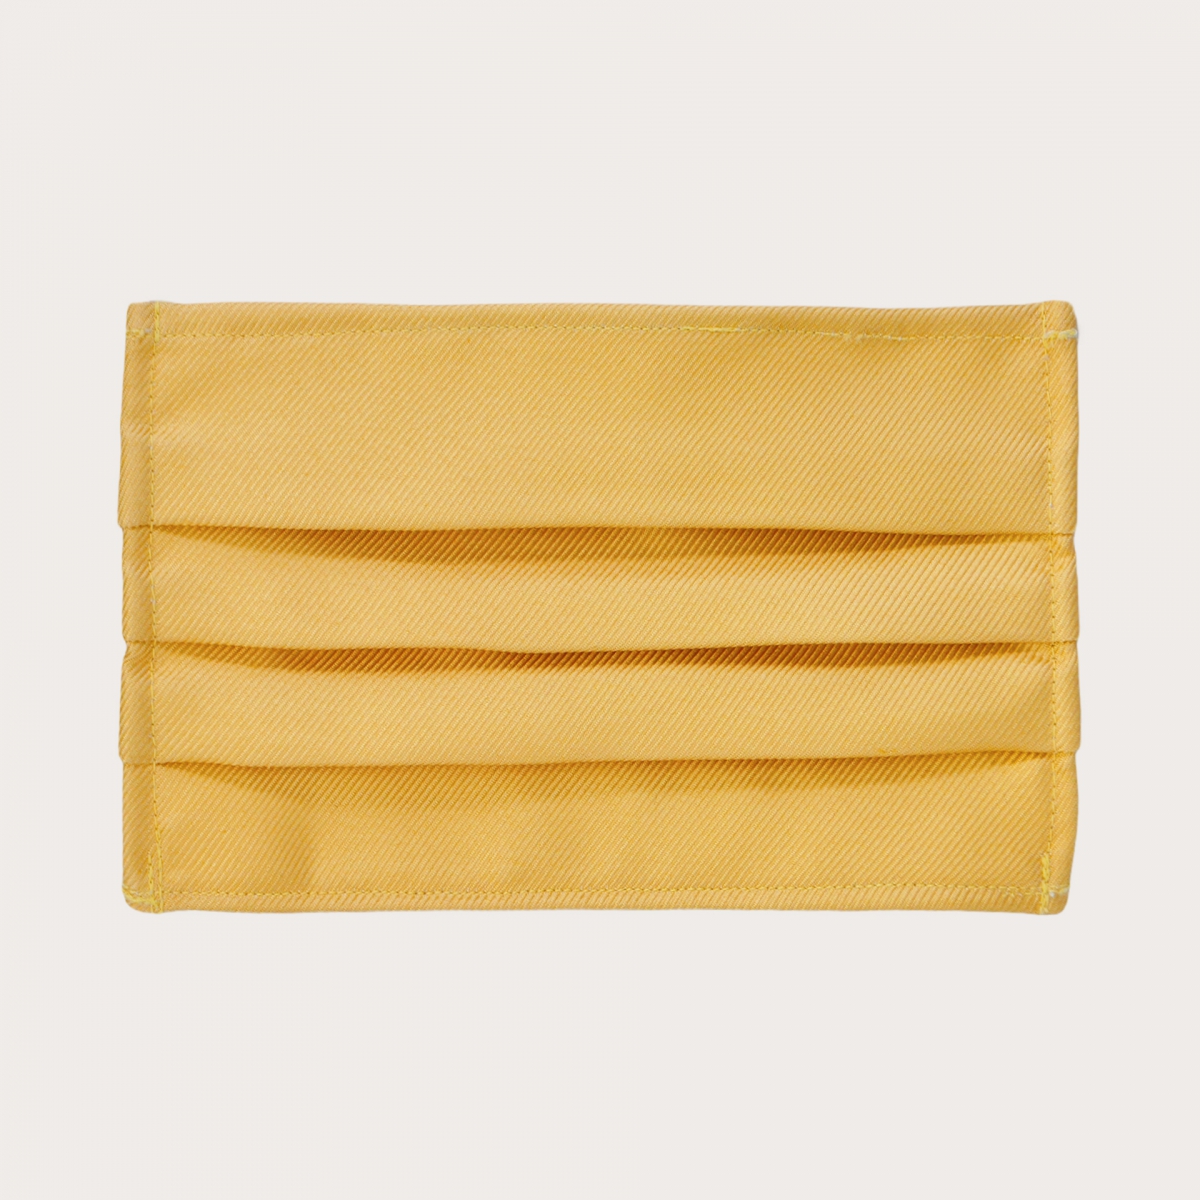 Fashion protective fabric mask, color yellow